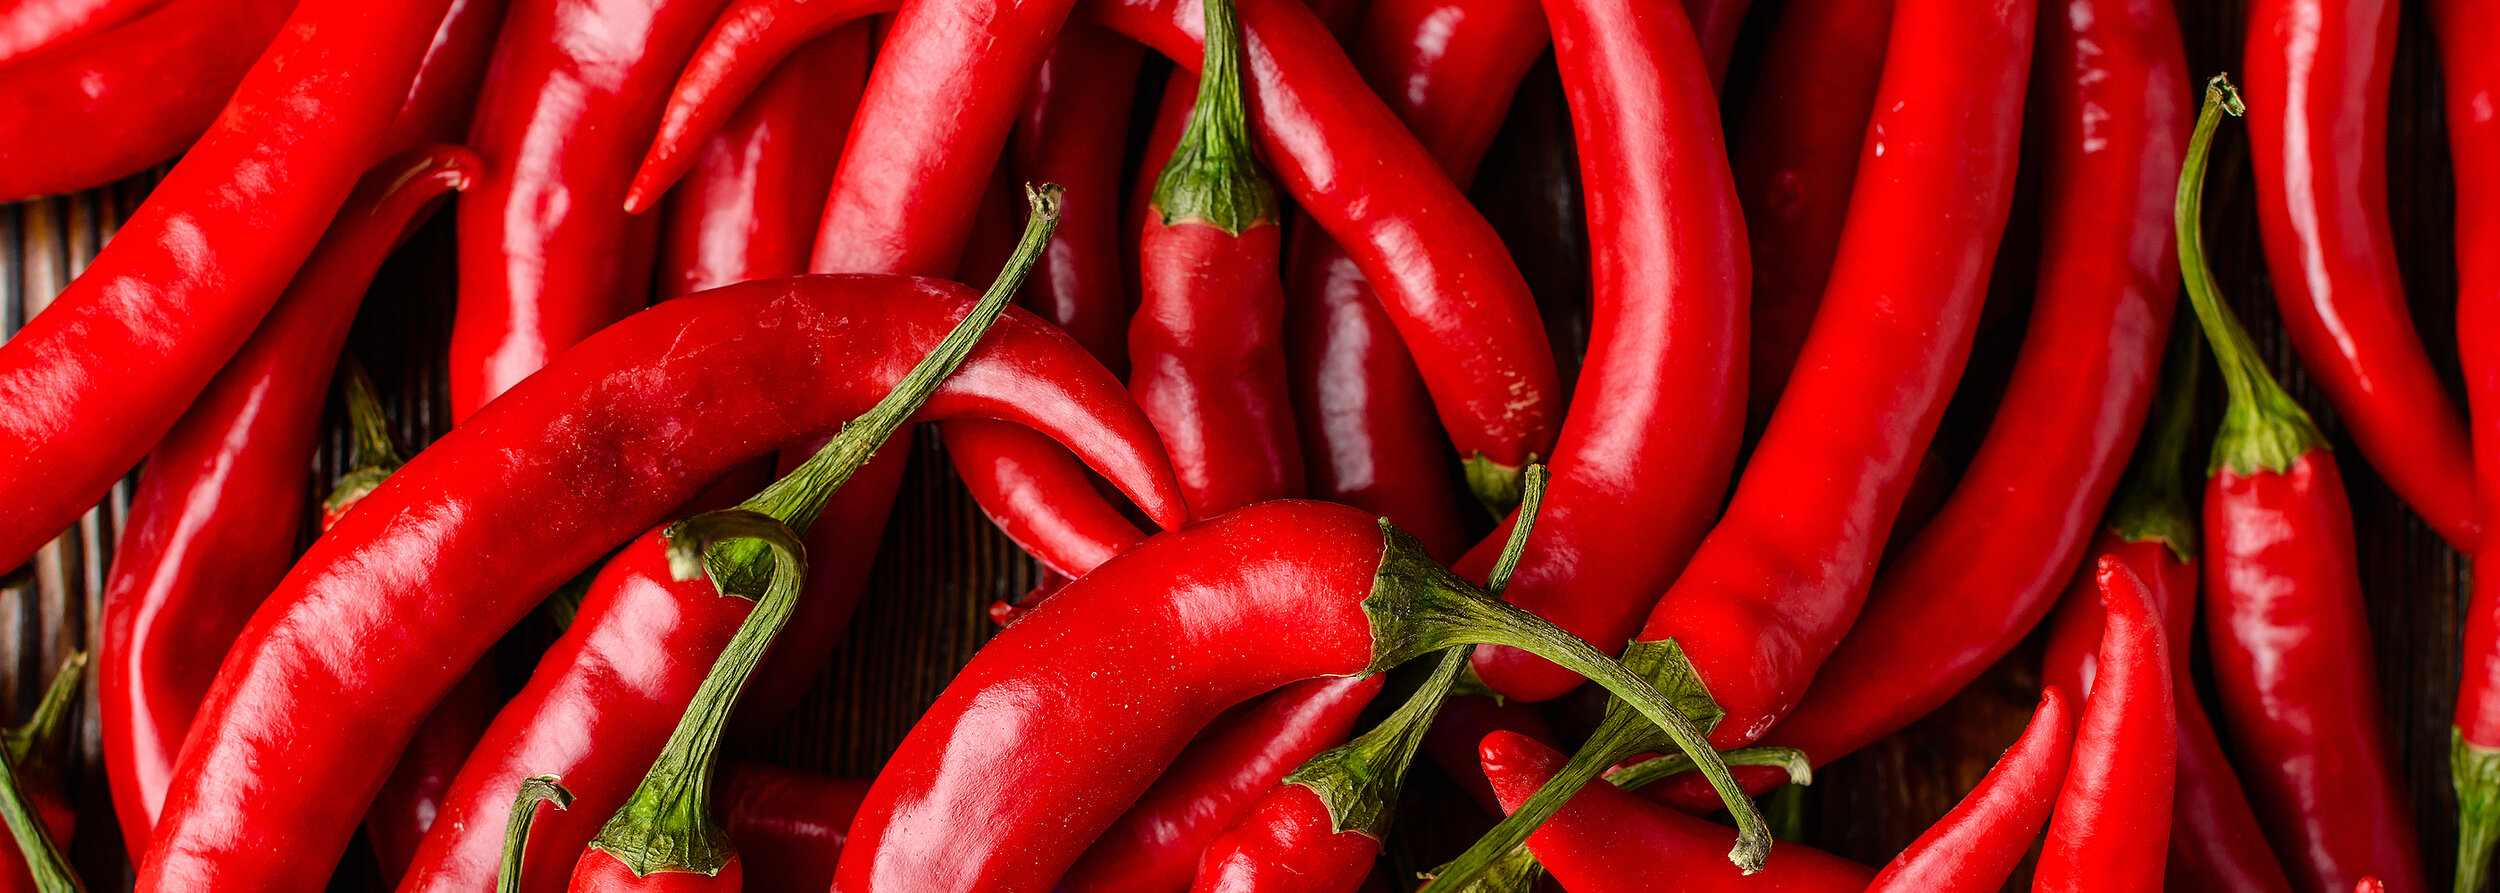 bigstock-Red-Hot-Chilli-Peppers-Pattern-276595195.jpg